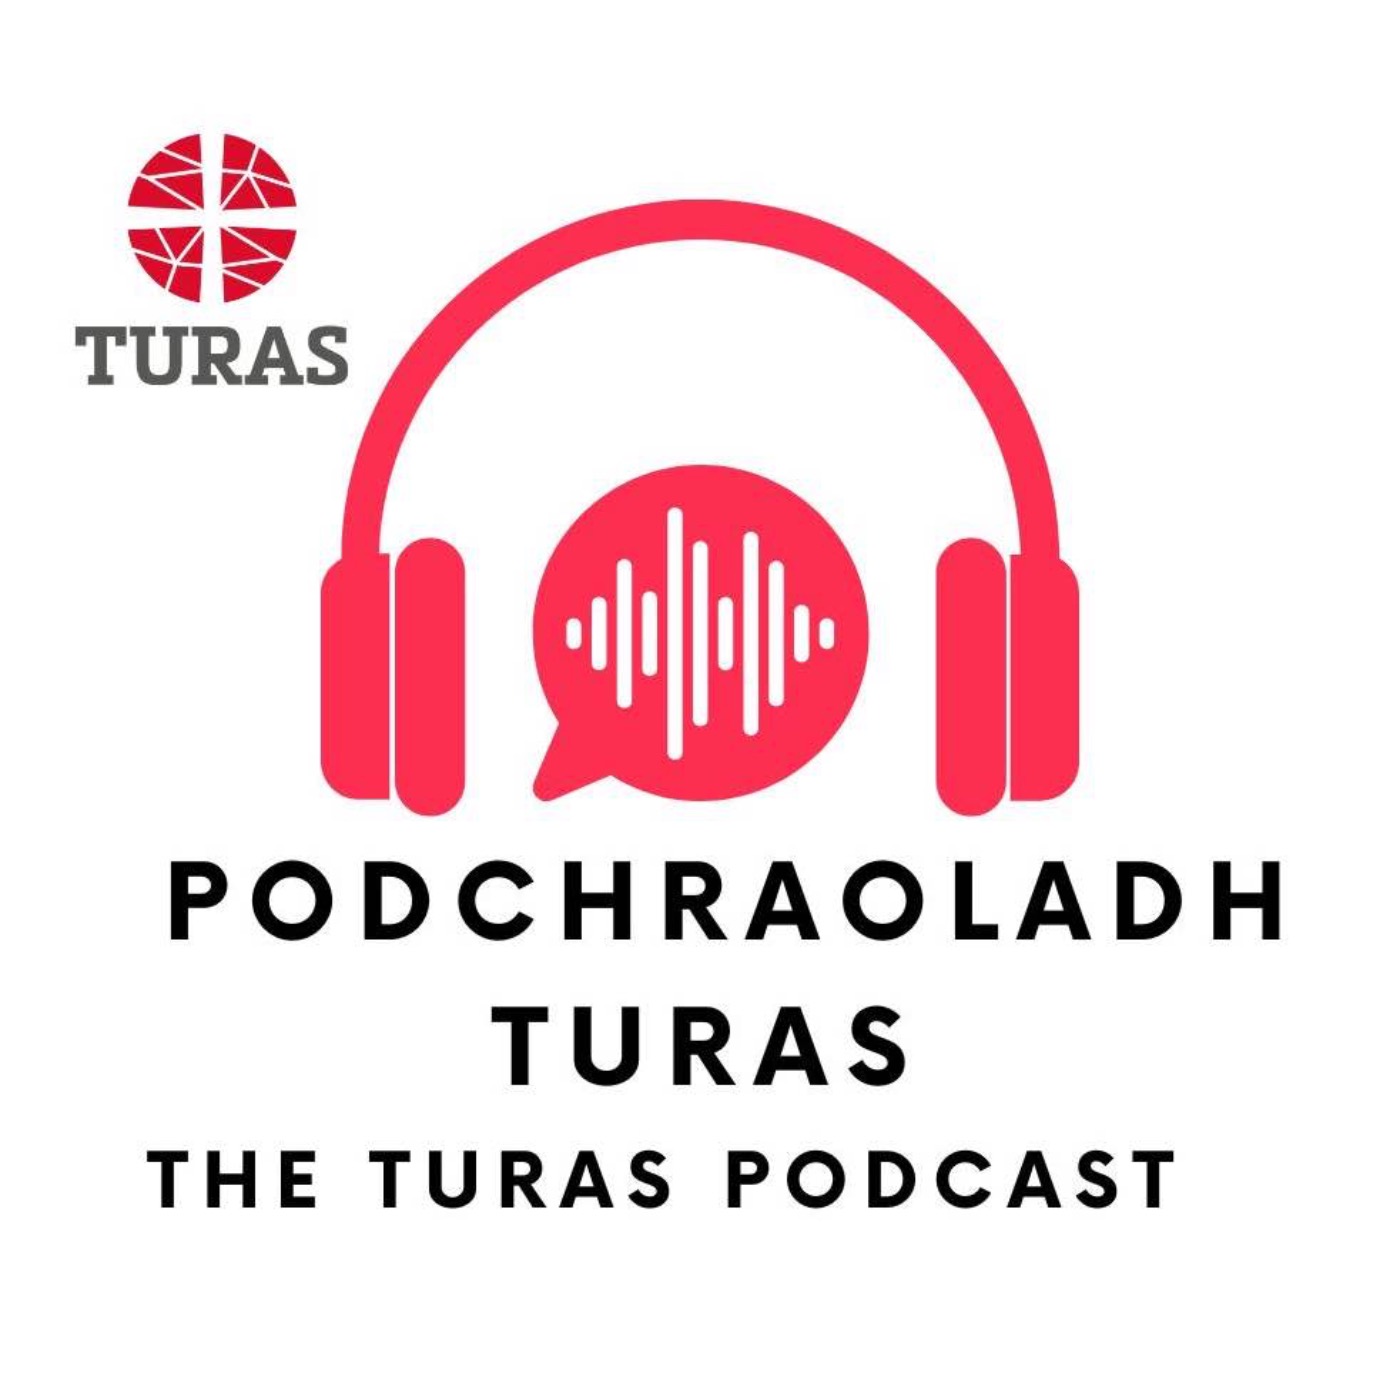 Podchraoladh Turas - The Turas Podcast - Clár a haon - Episode 1